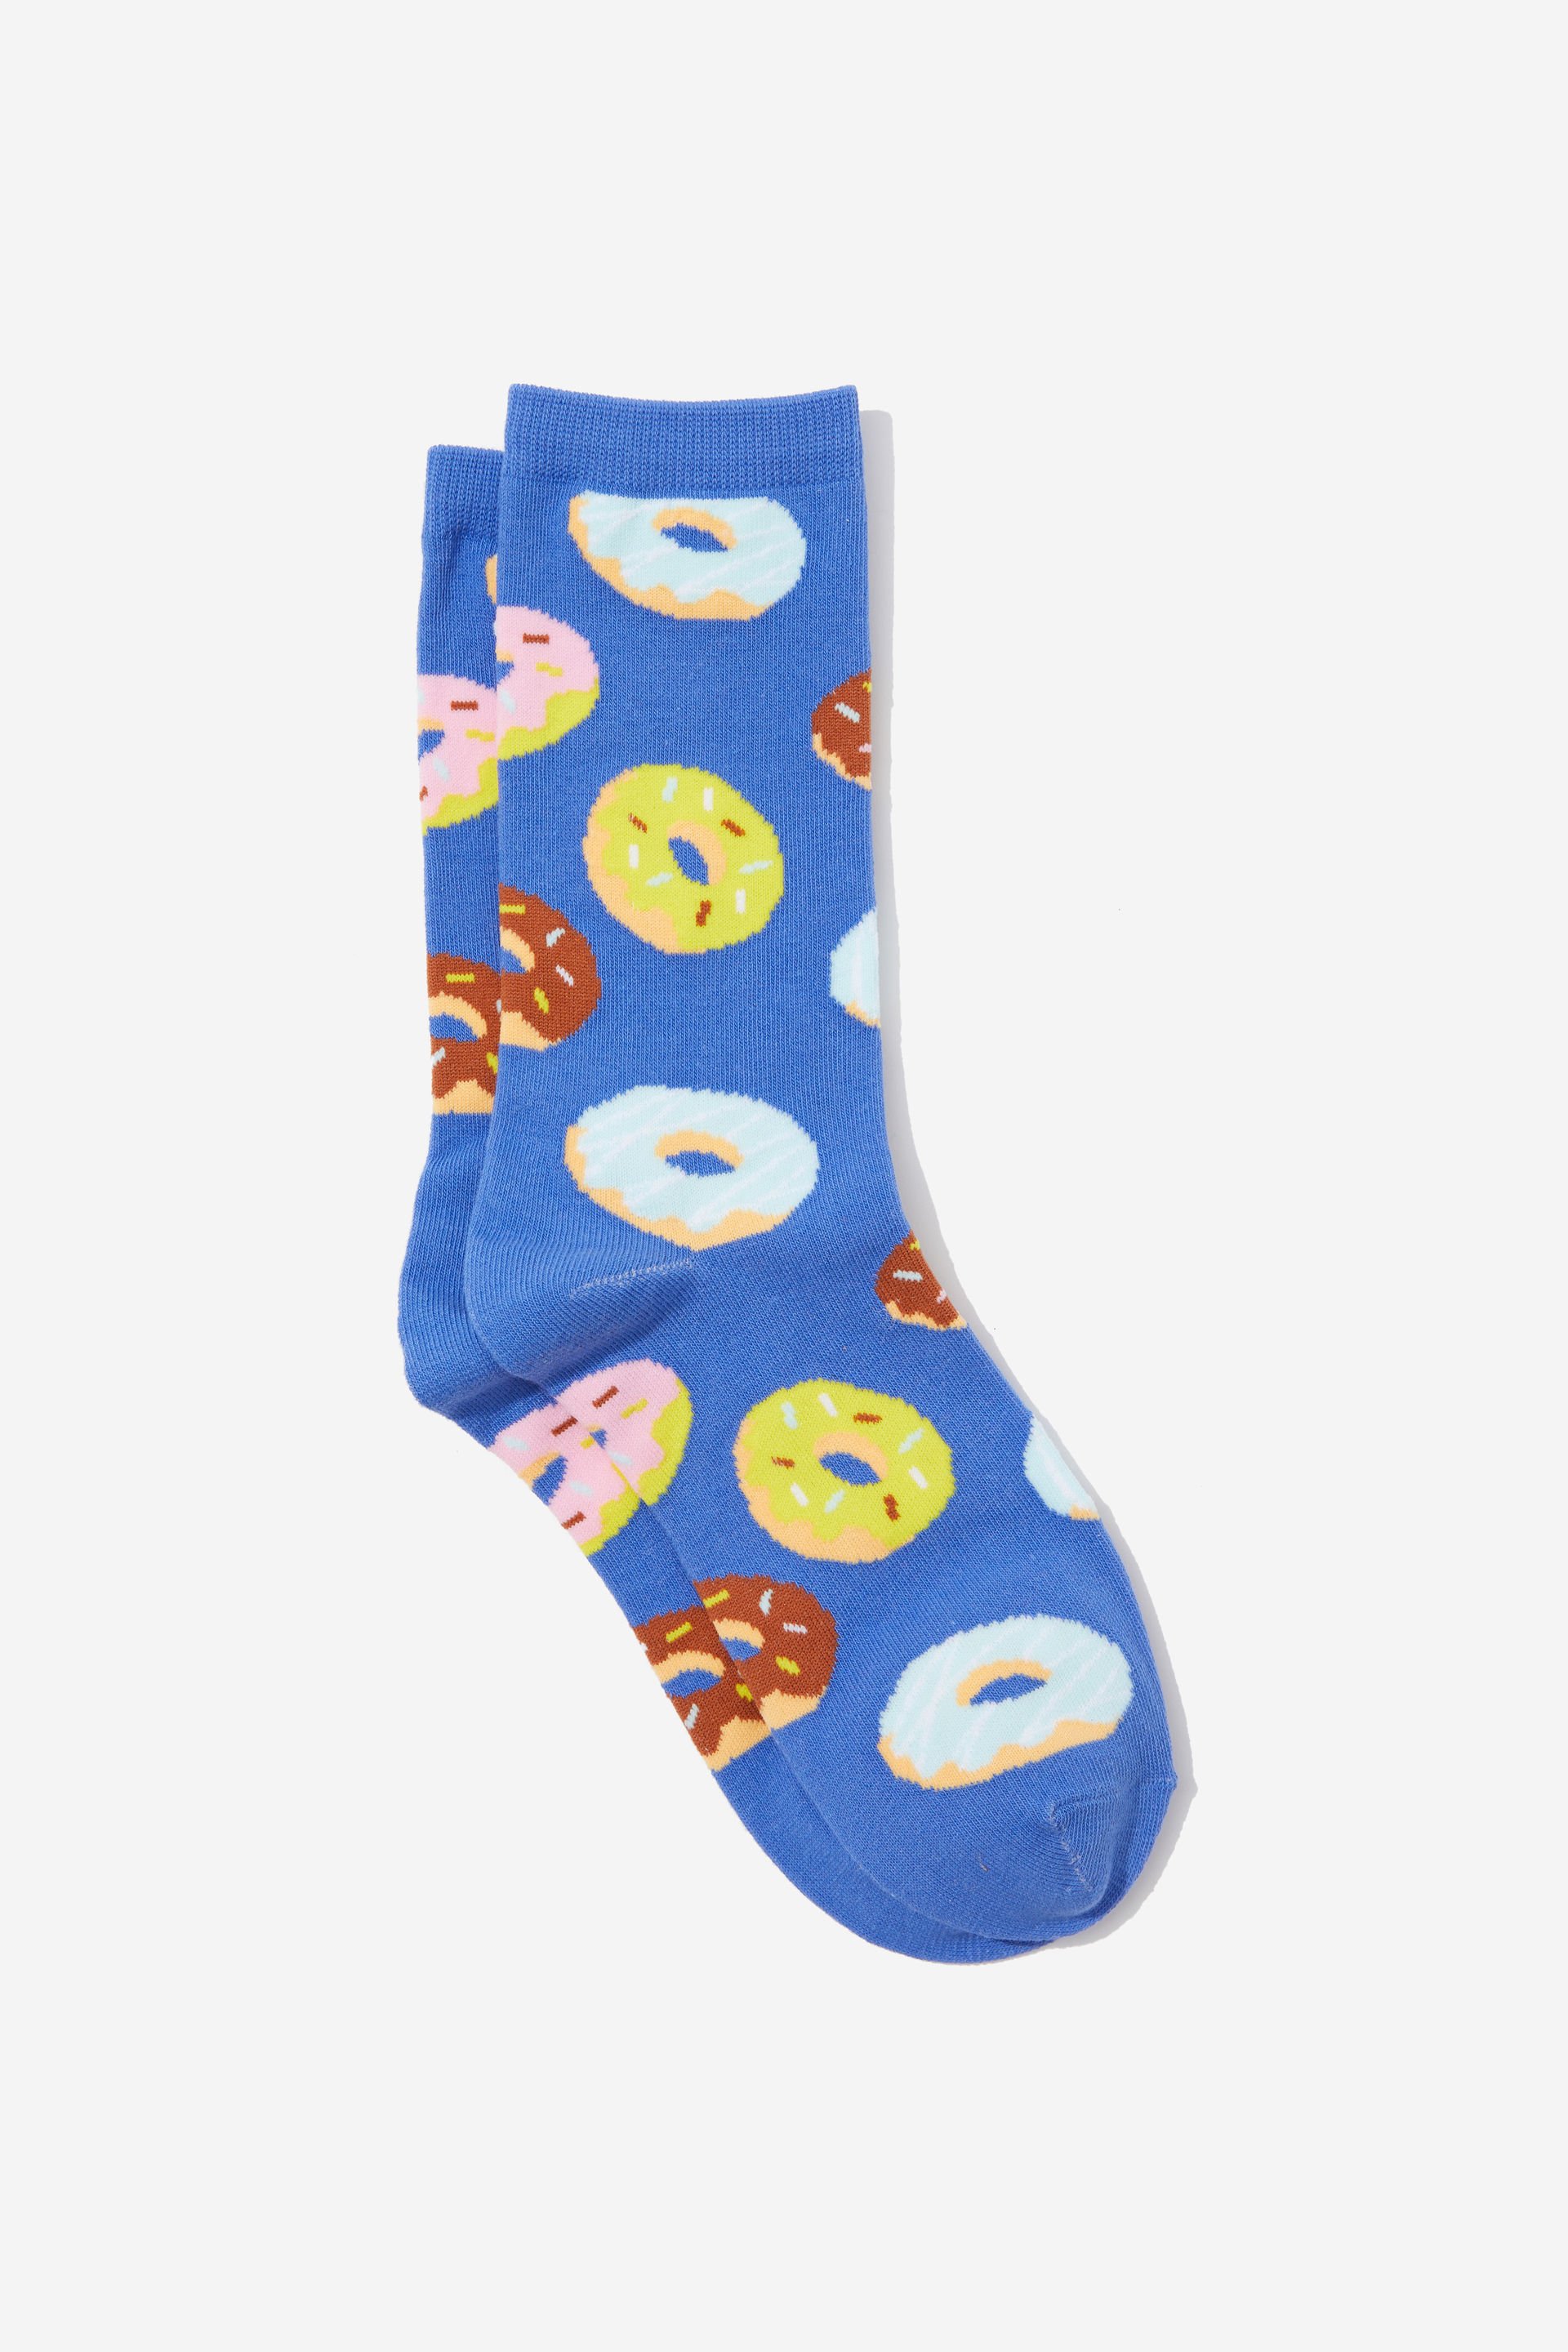 Typo - Socks - Donuts multi blue